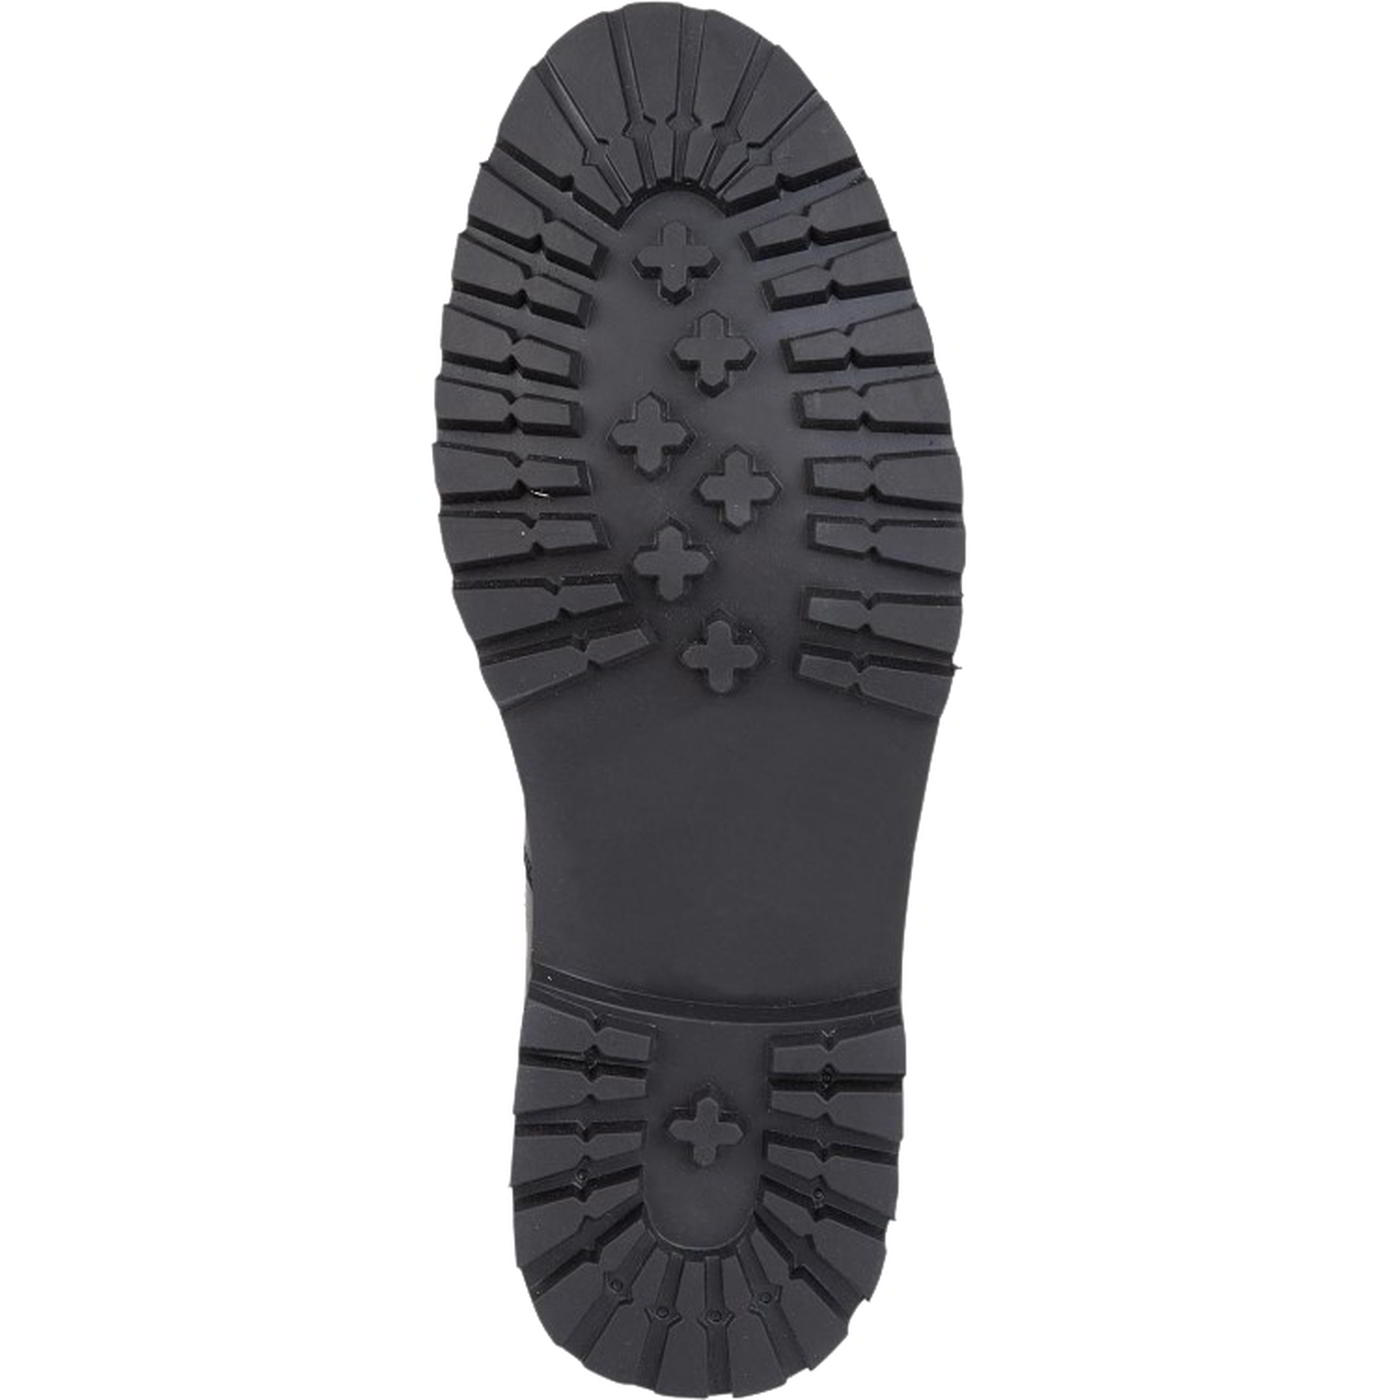 Grafters Original 60s Monkey Boots Mens Womens Black Shoes Size UK 4-12 